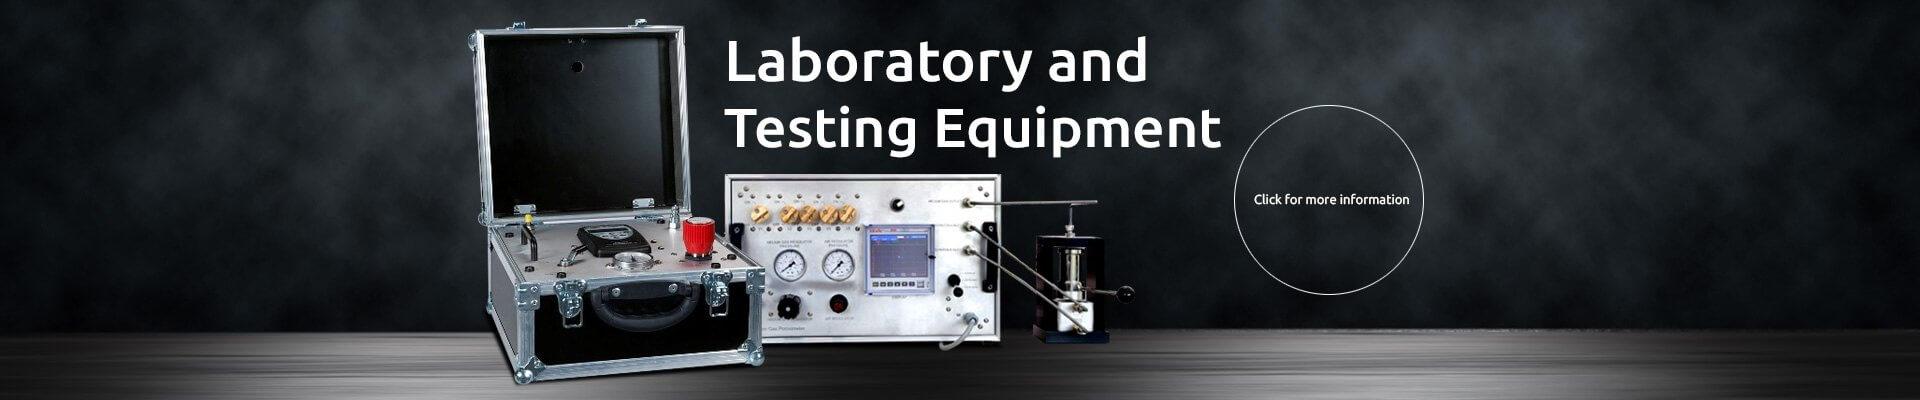 Laboratory and Testing Equipment